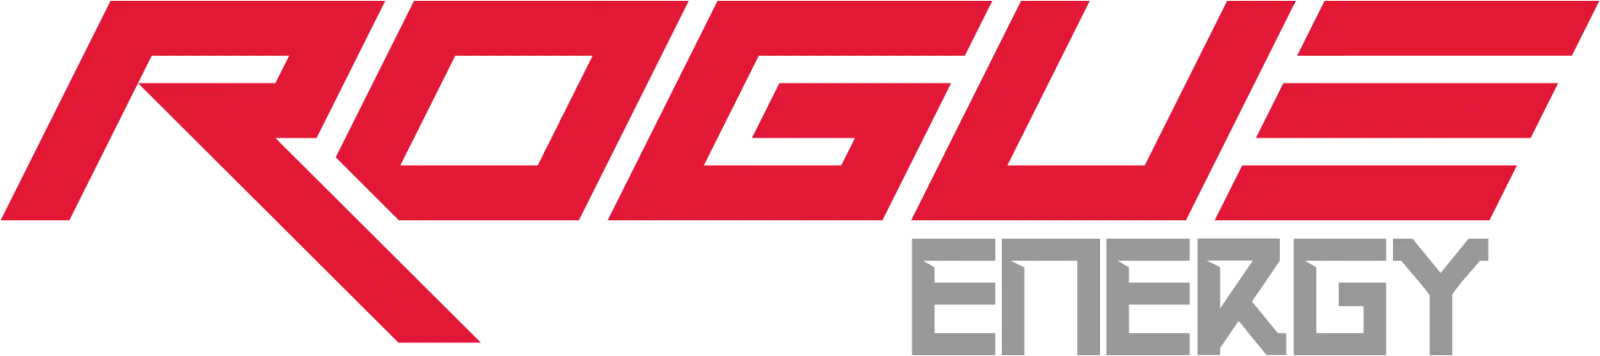 rogue energy logo